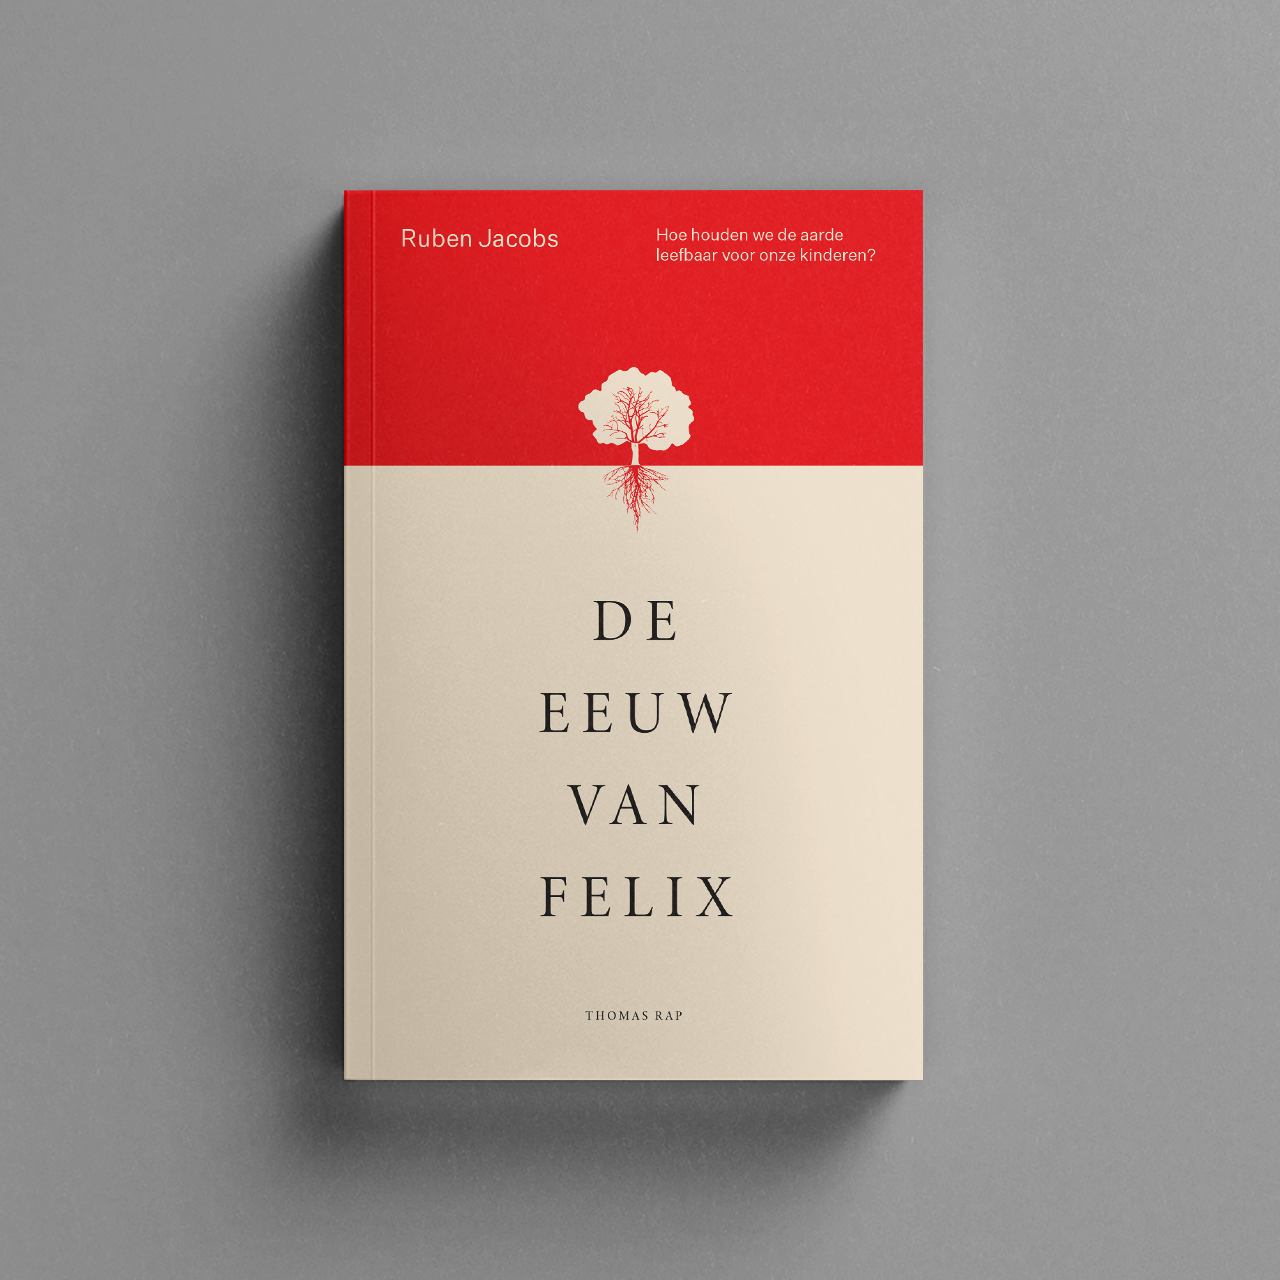 Digital-books_VanFelix